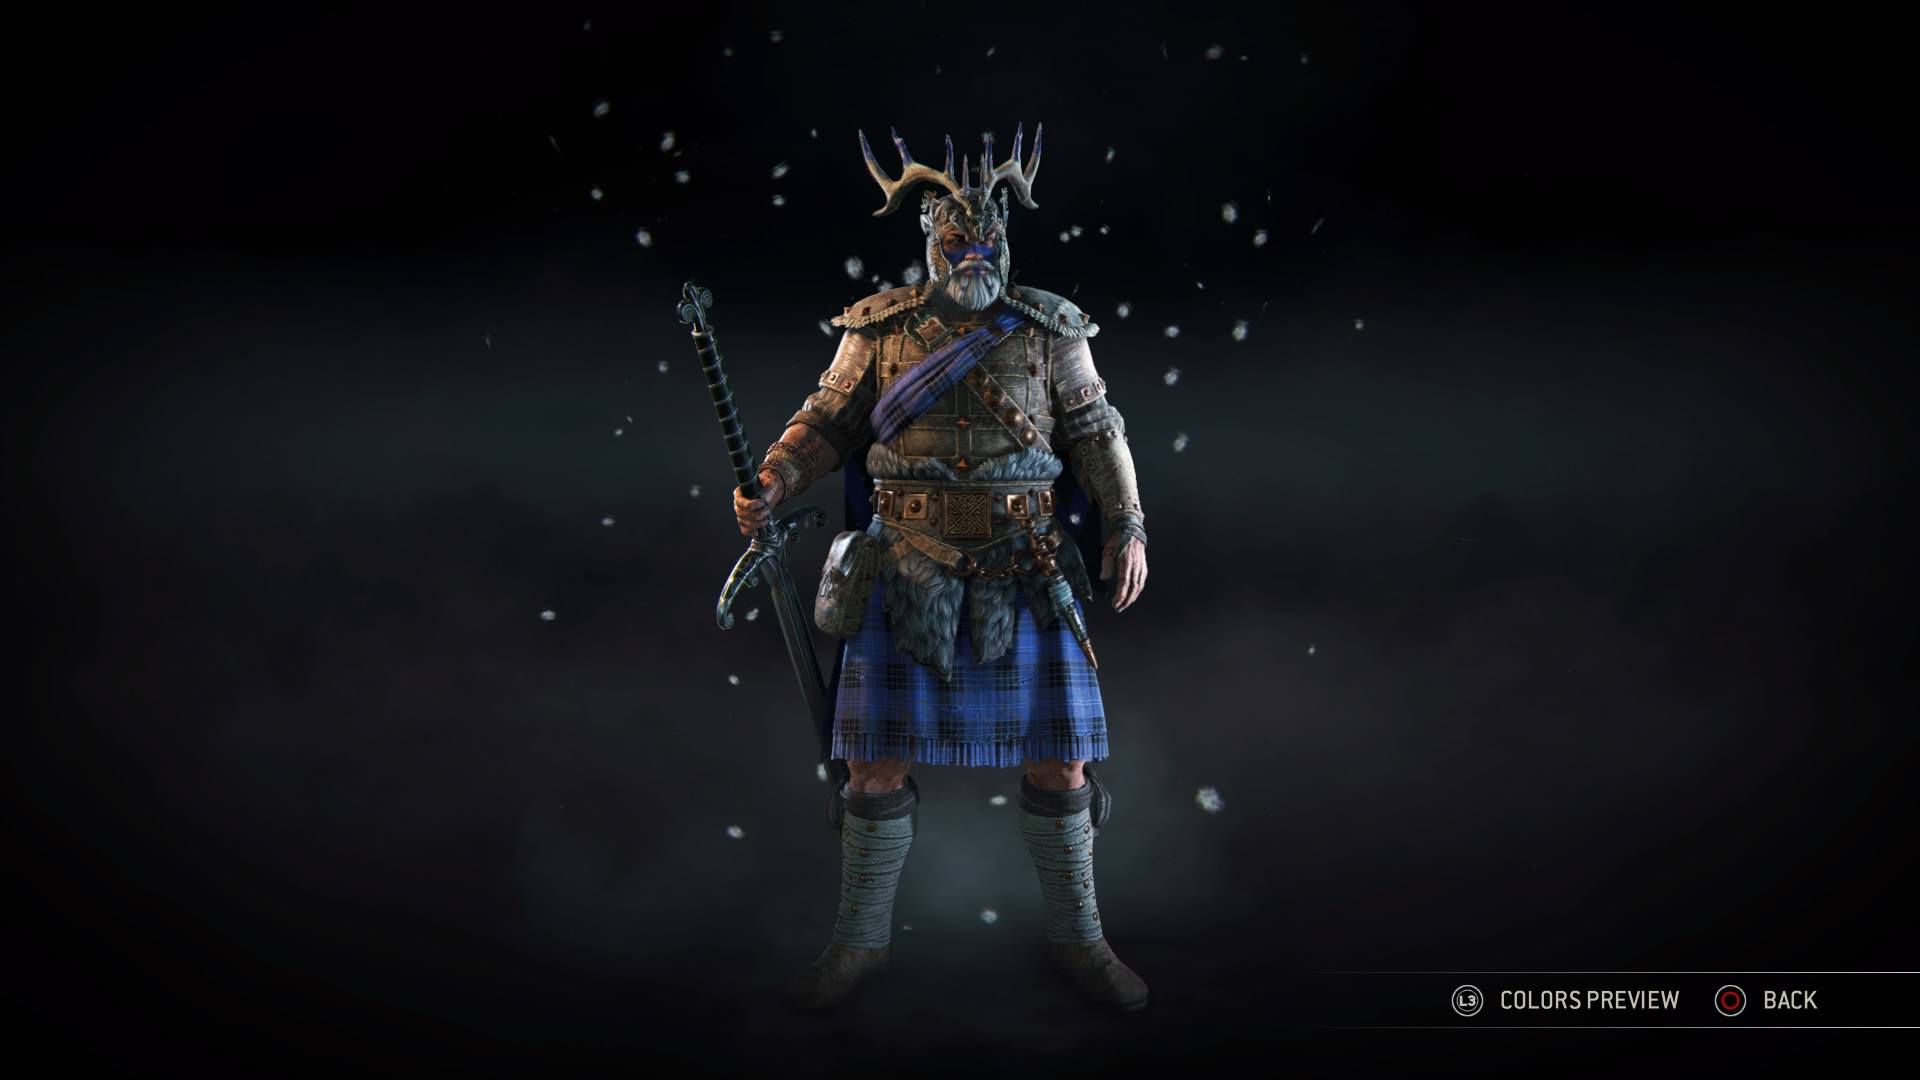 Highlander for Honor Wallpapers - Top Free Highlander for Honor